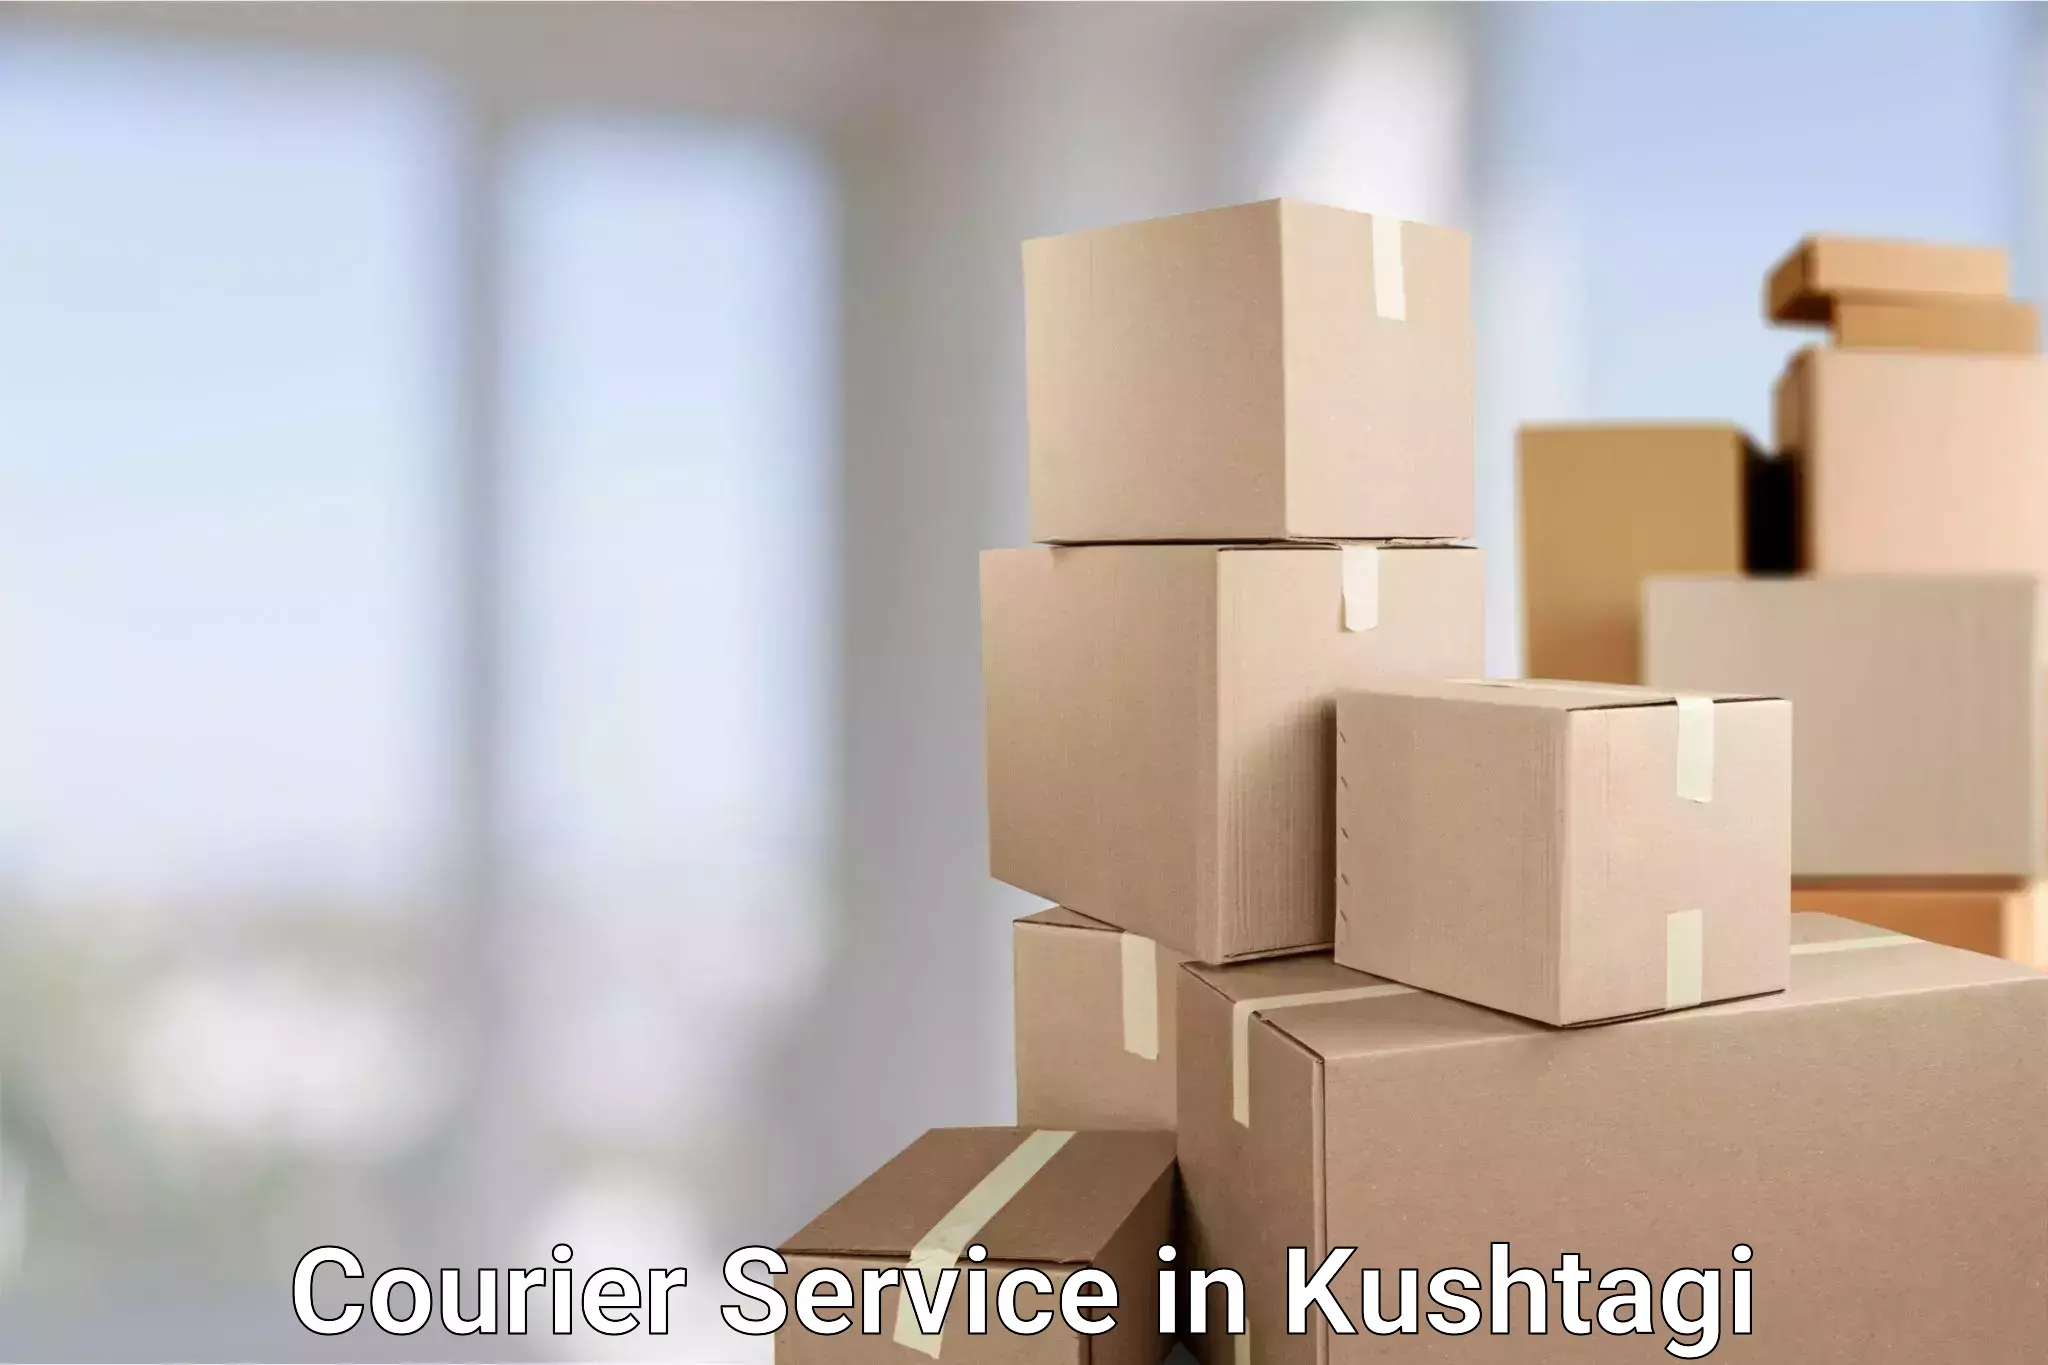 Specialized shipment handling in Kushtagi